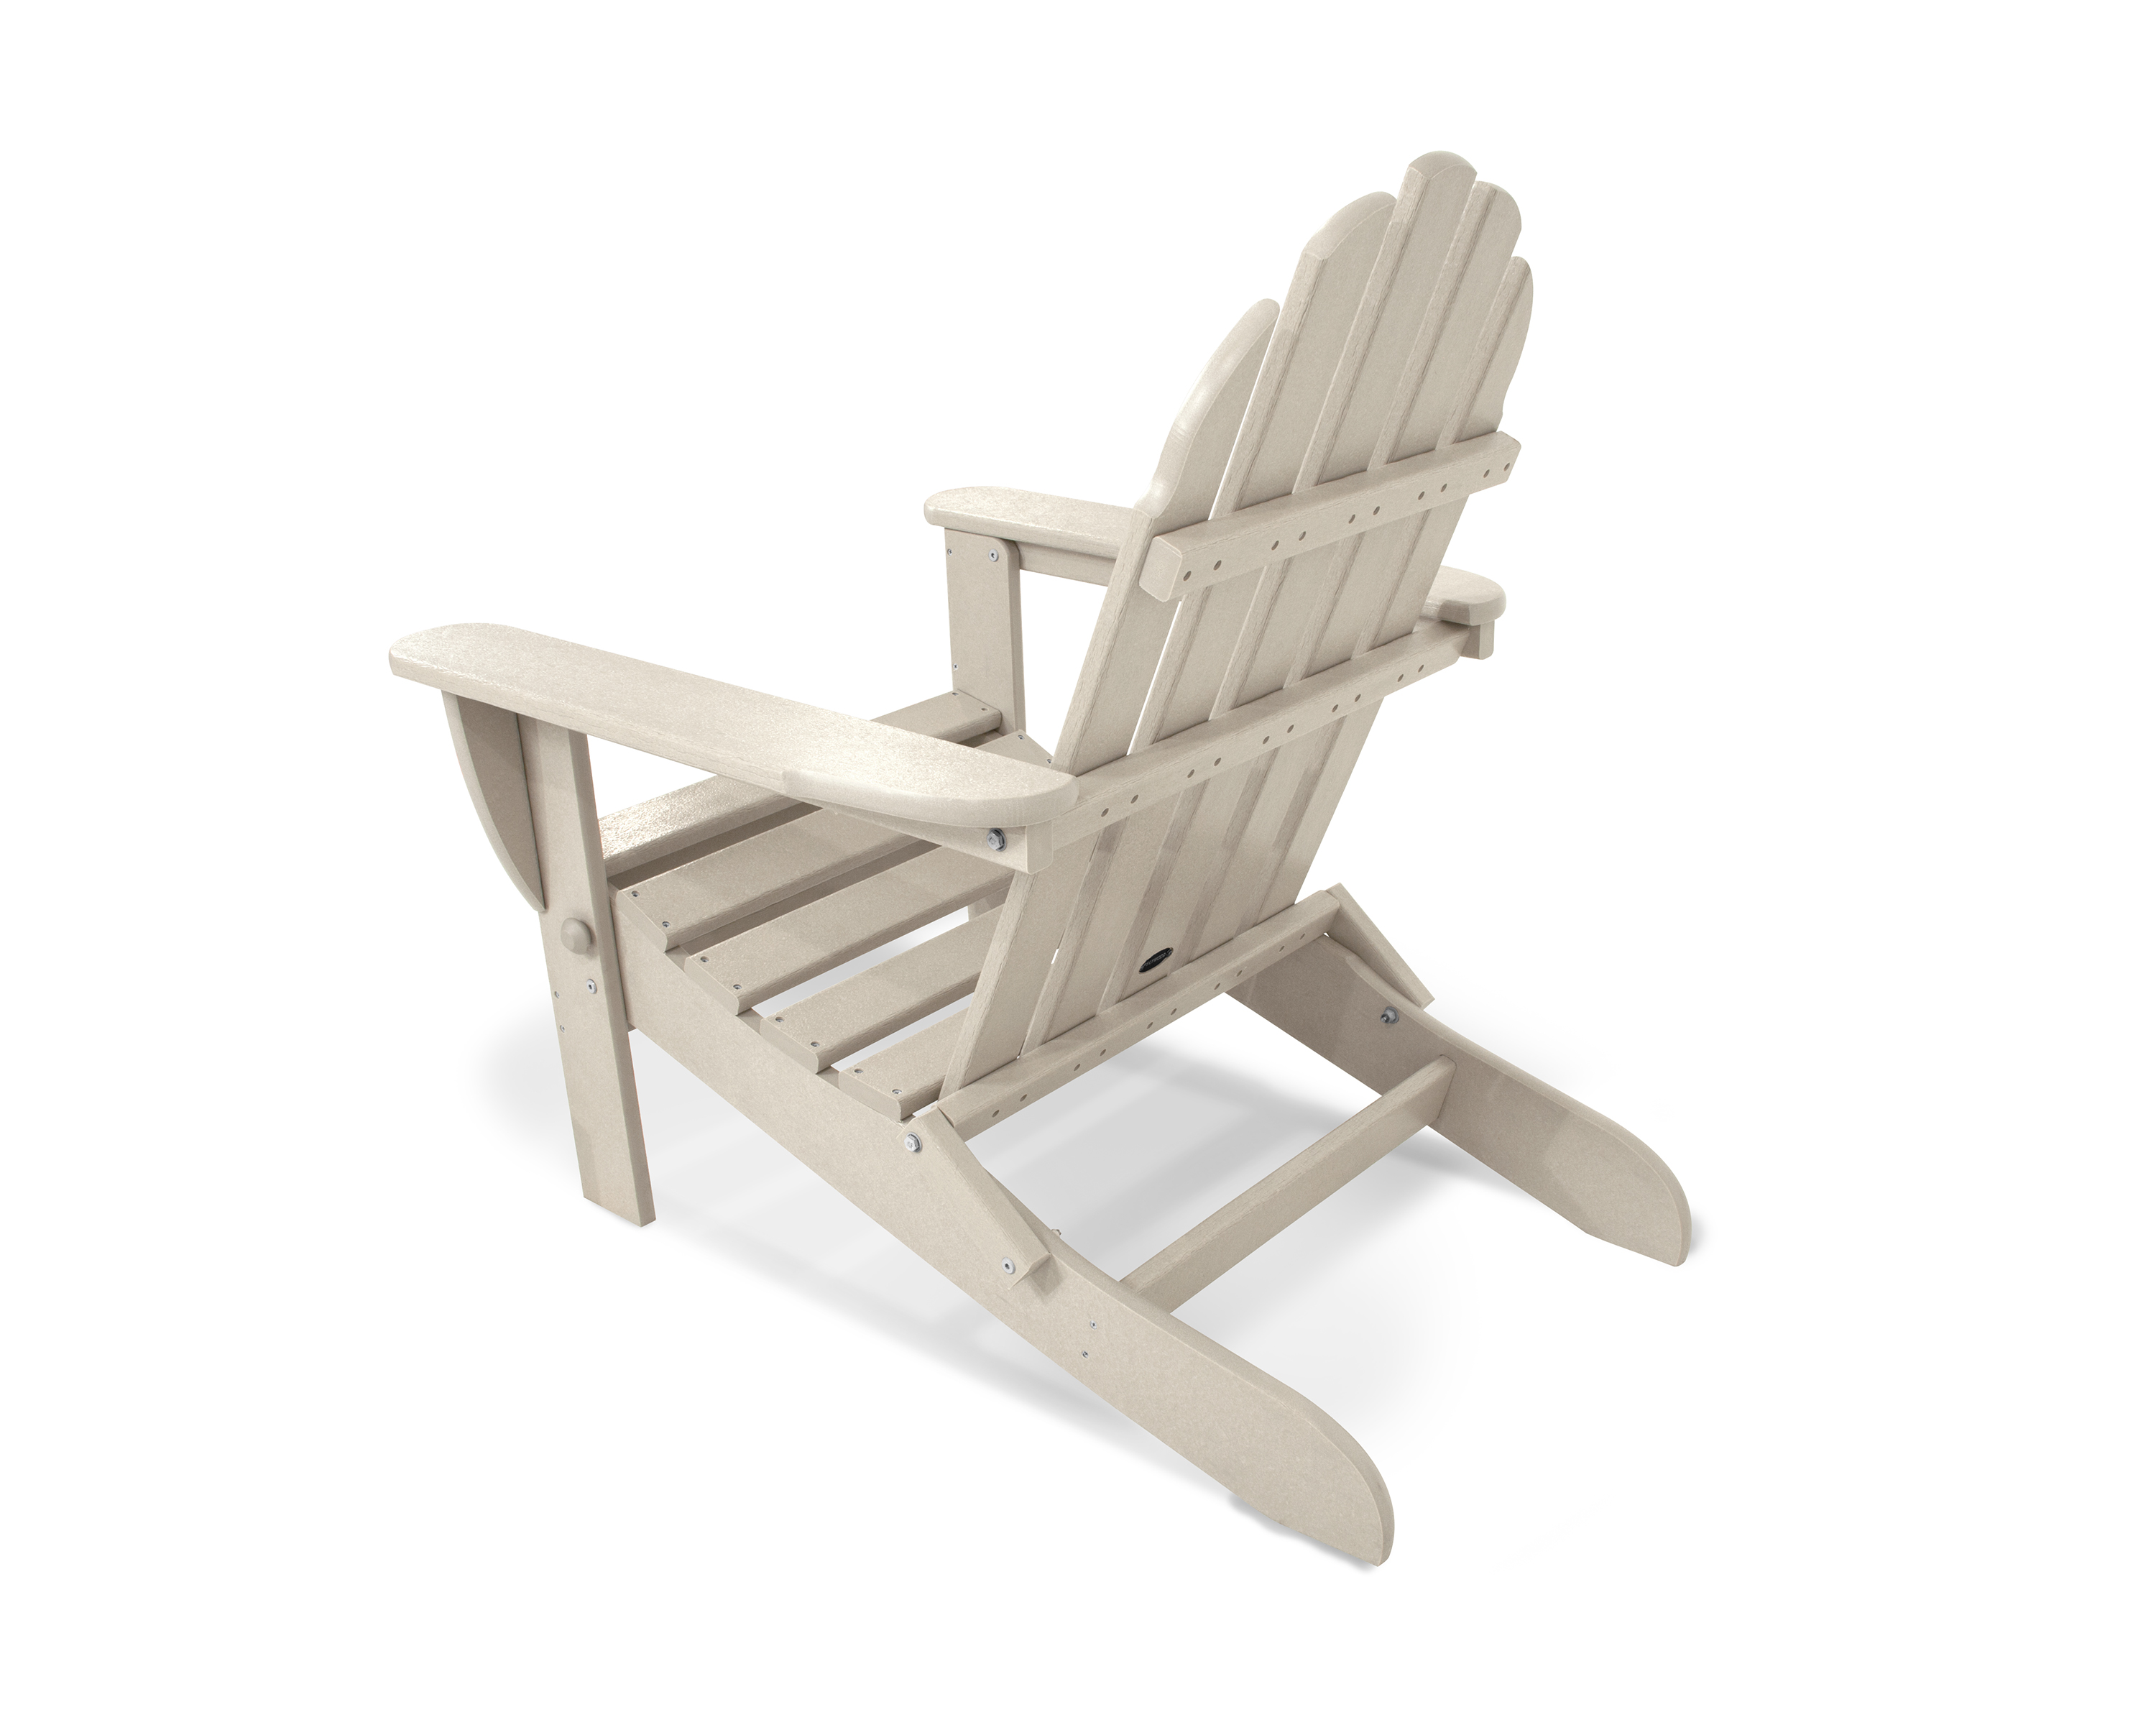 classic folding adirondack chair in sand thumbnail image